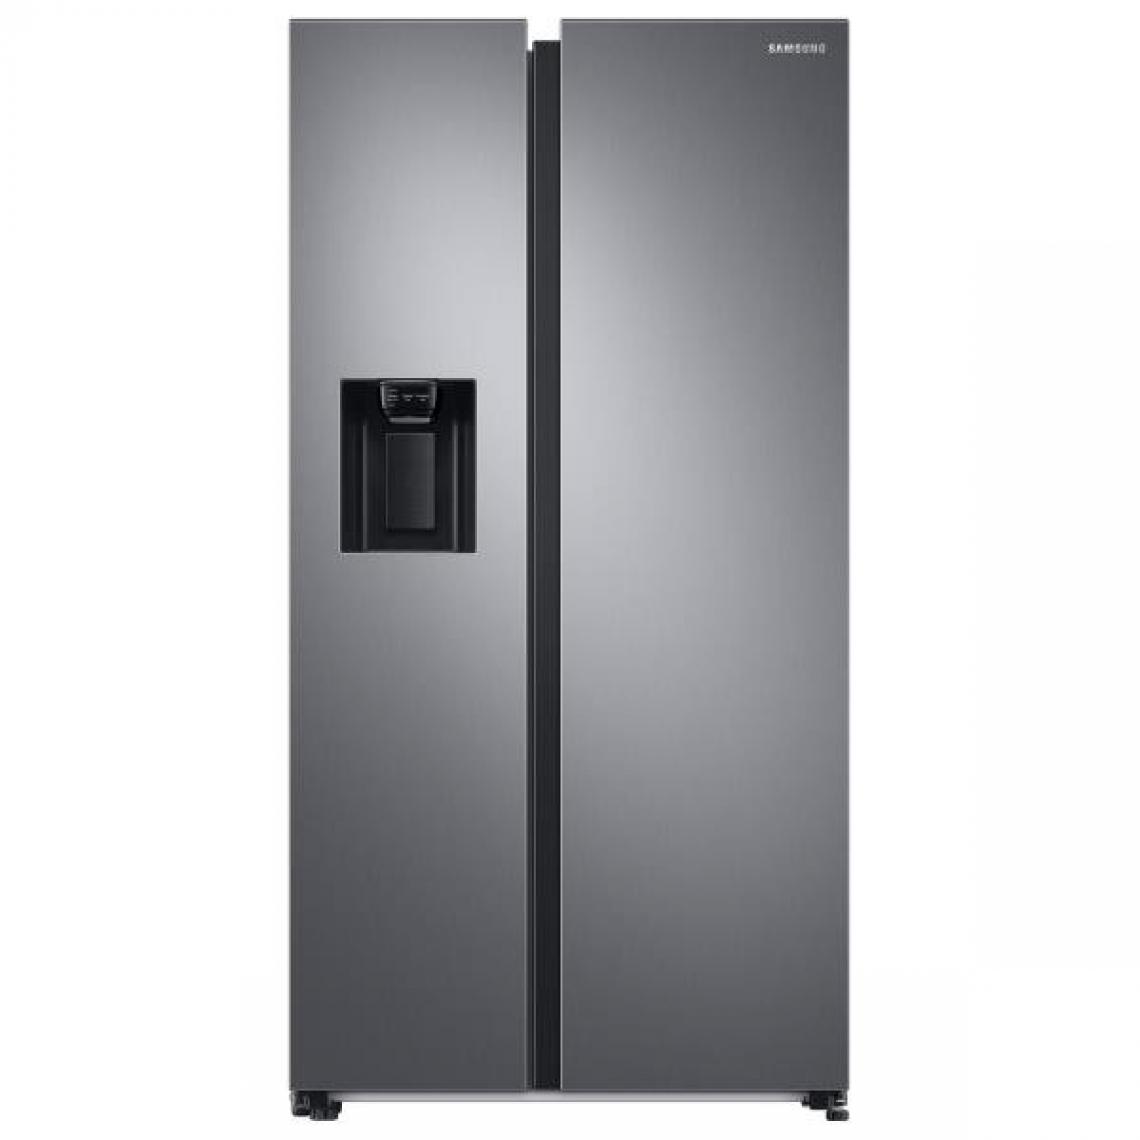 Samsung - samsung - rs68a8840s9 - Réfrigérateur américain